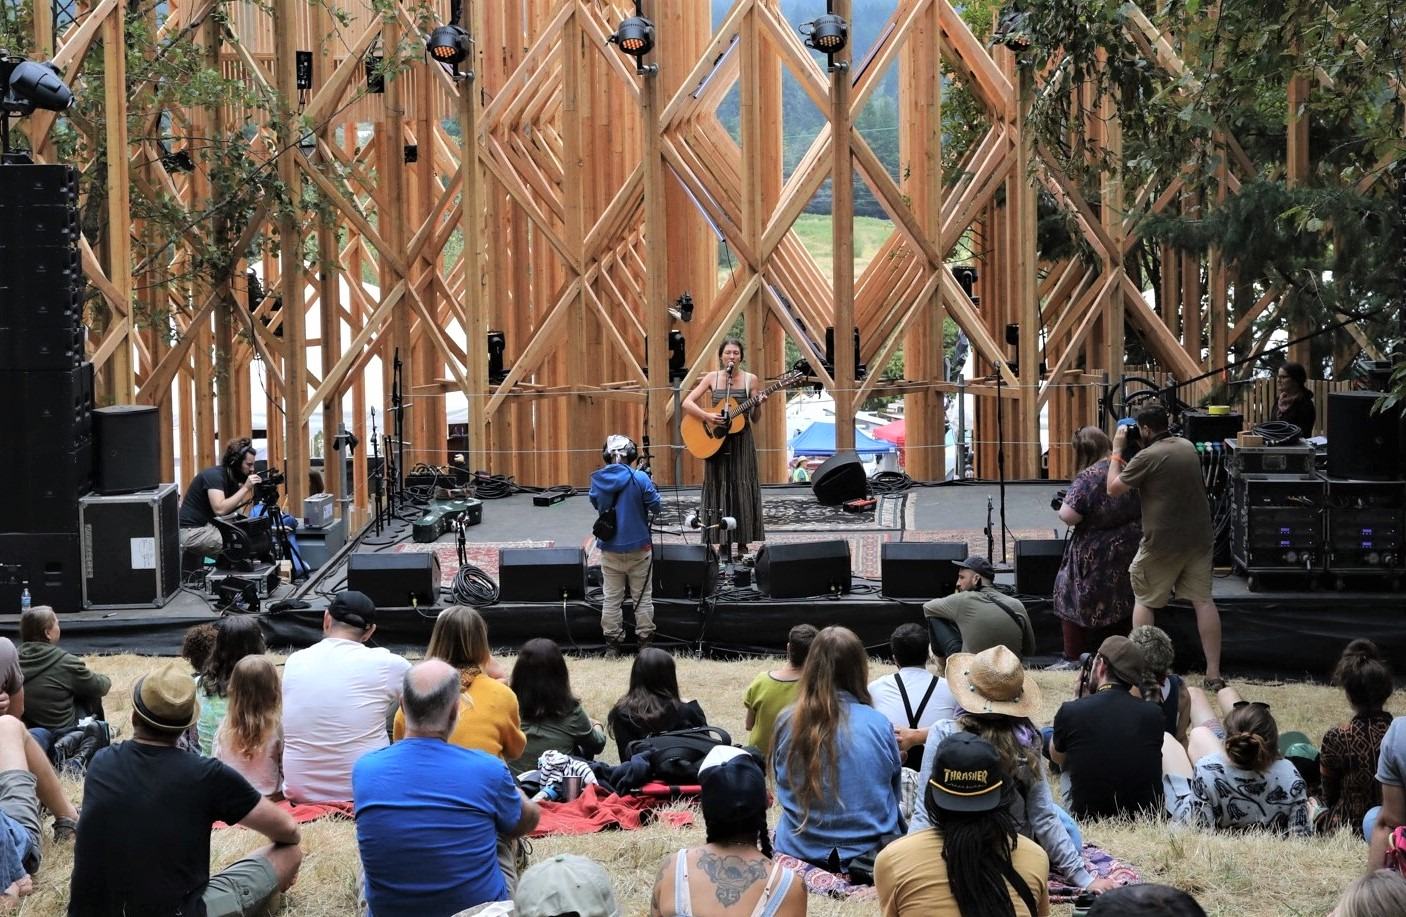 Alela Diane performs on the Treeline stage at Pickathon 2018